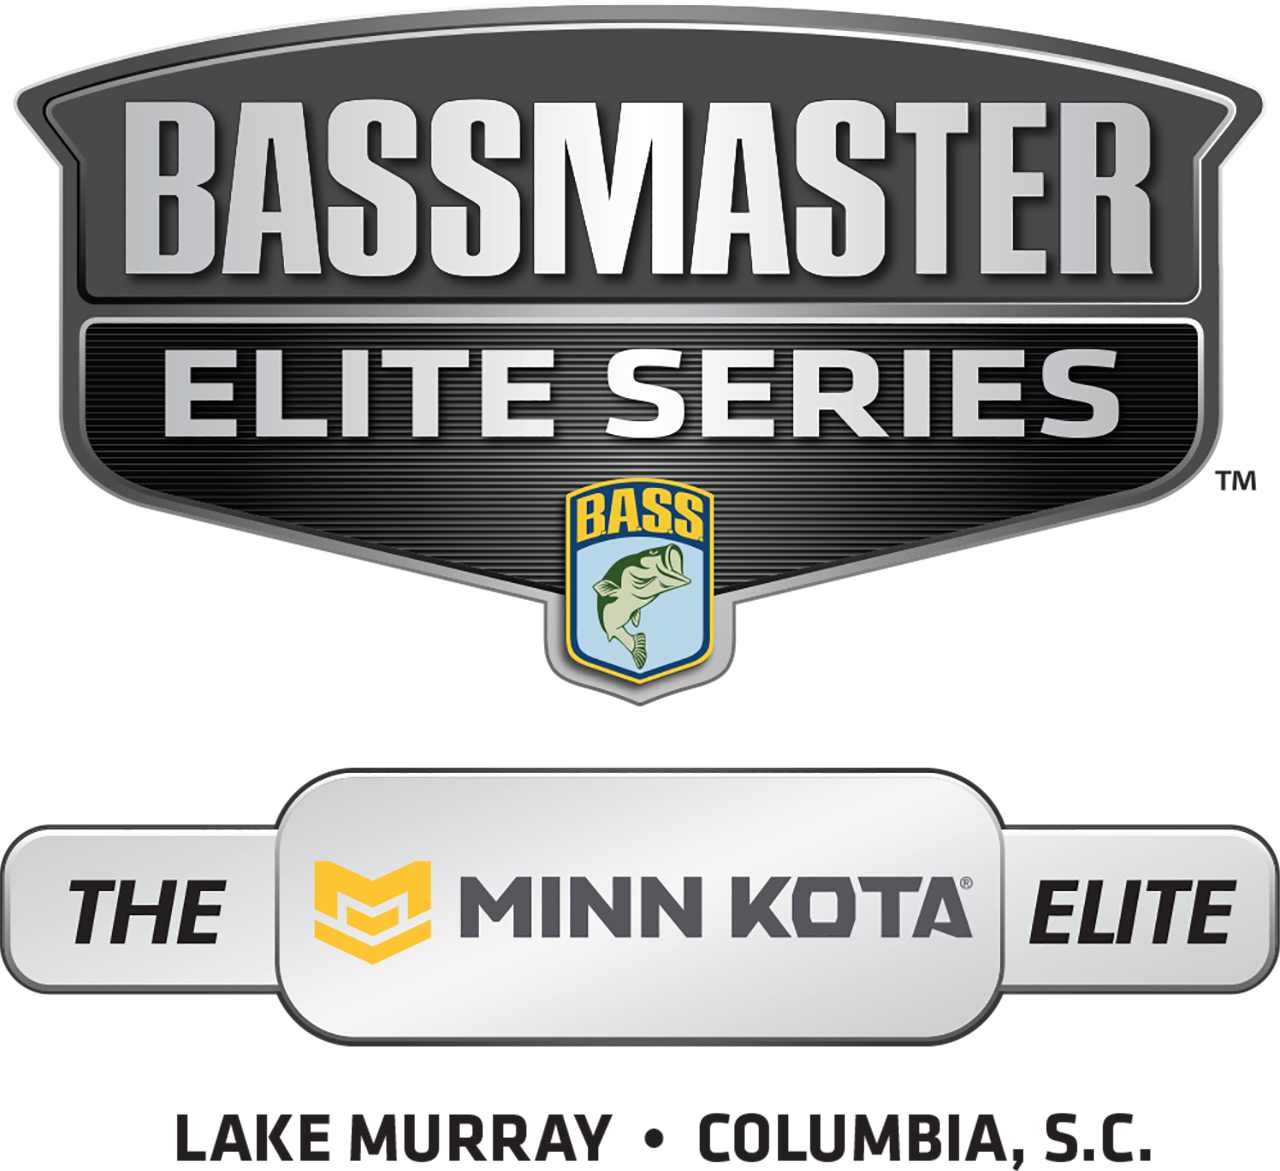 Lake Murray primed to shine during Elite Series tournament - Bassmaster